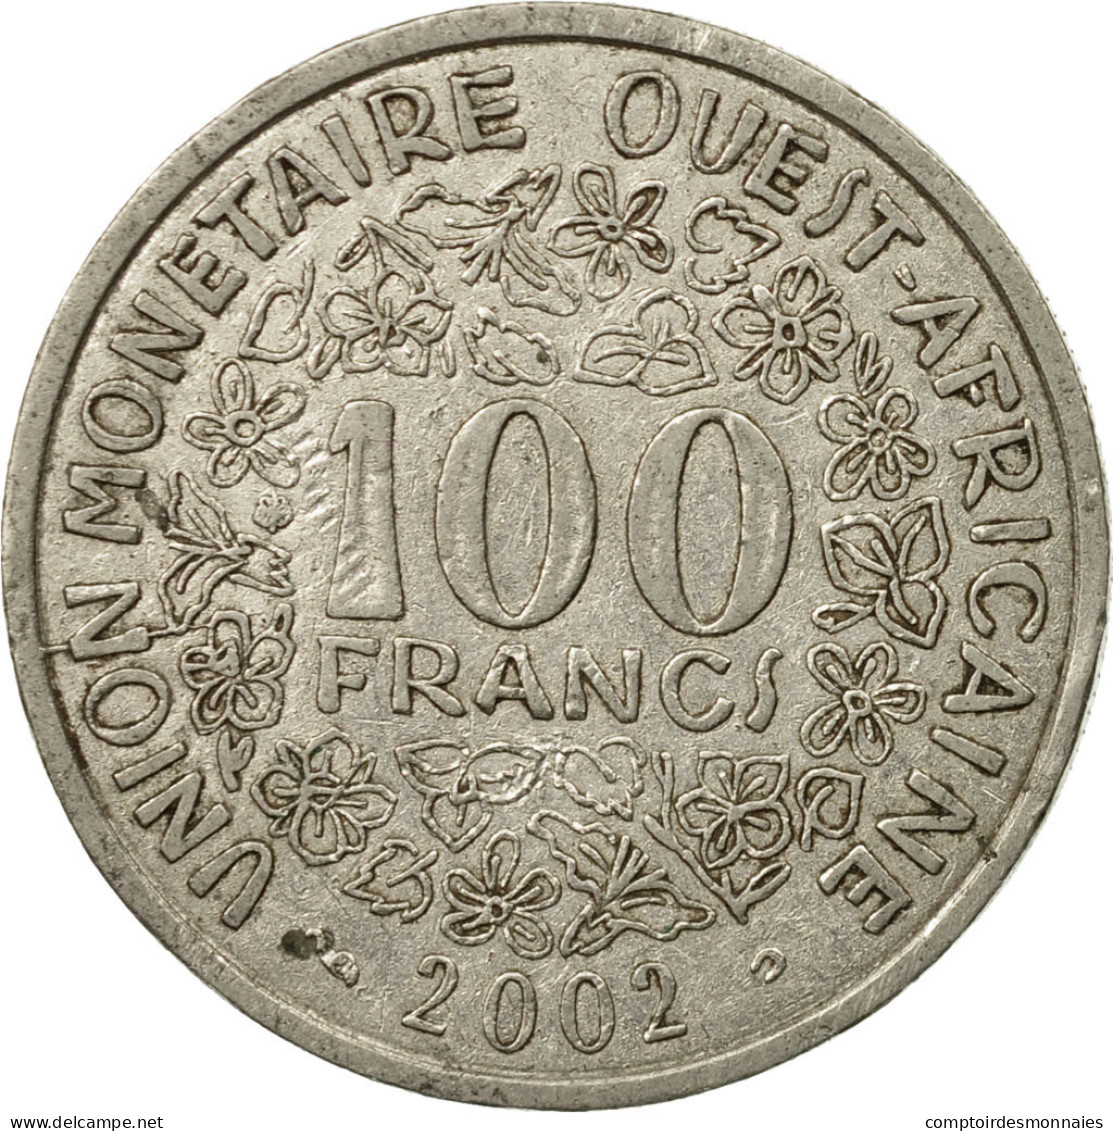 Monnaie, West African States, 100 Francs, 2002, Paris, TTB, Nickel, KM:4 - Ivory Coast